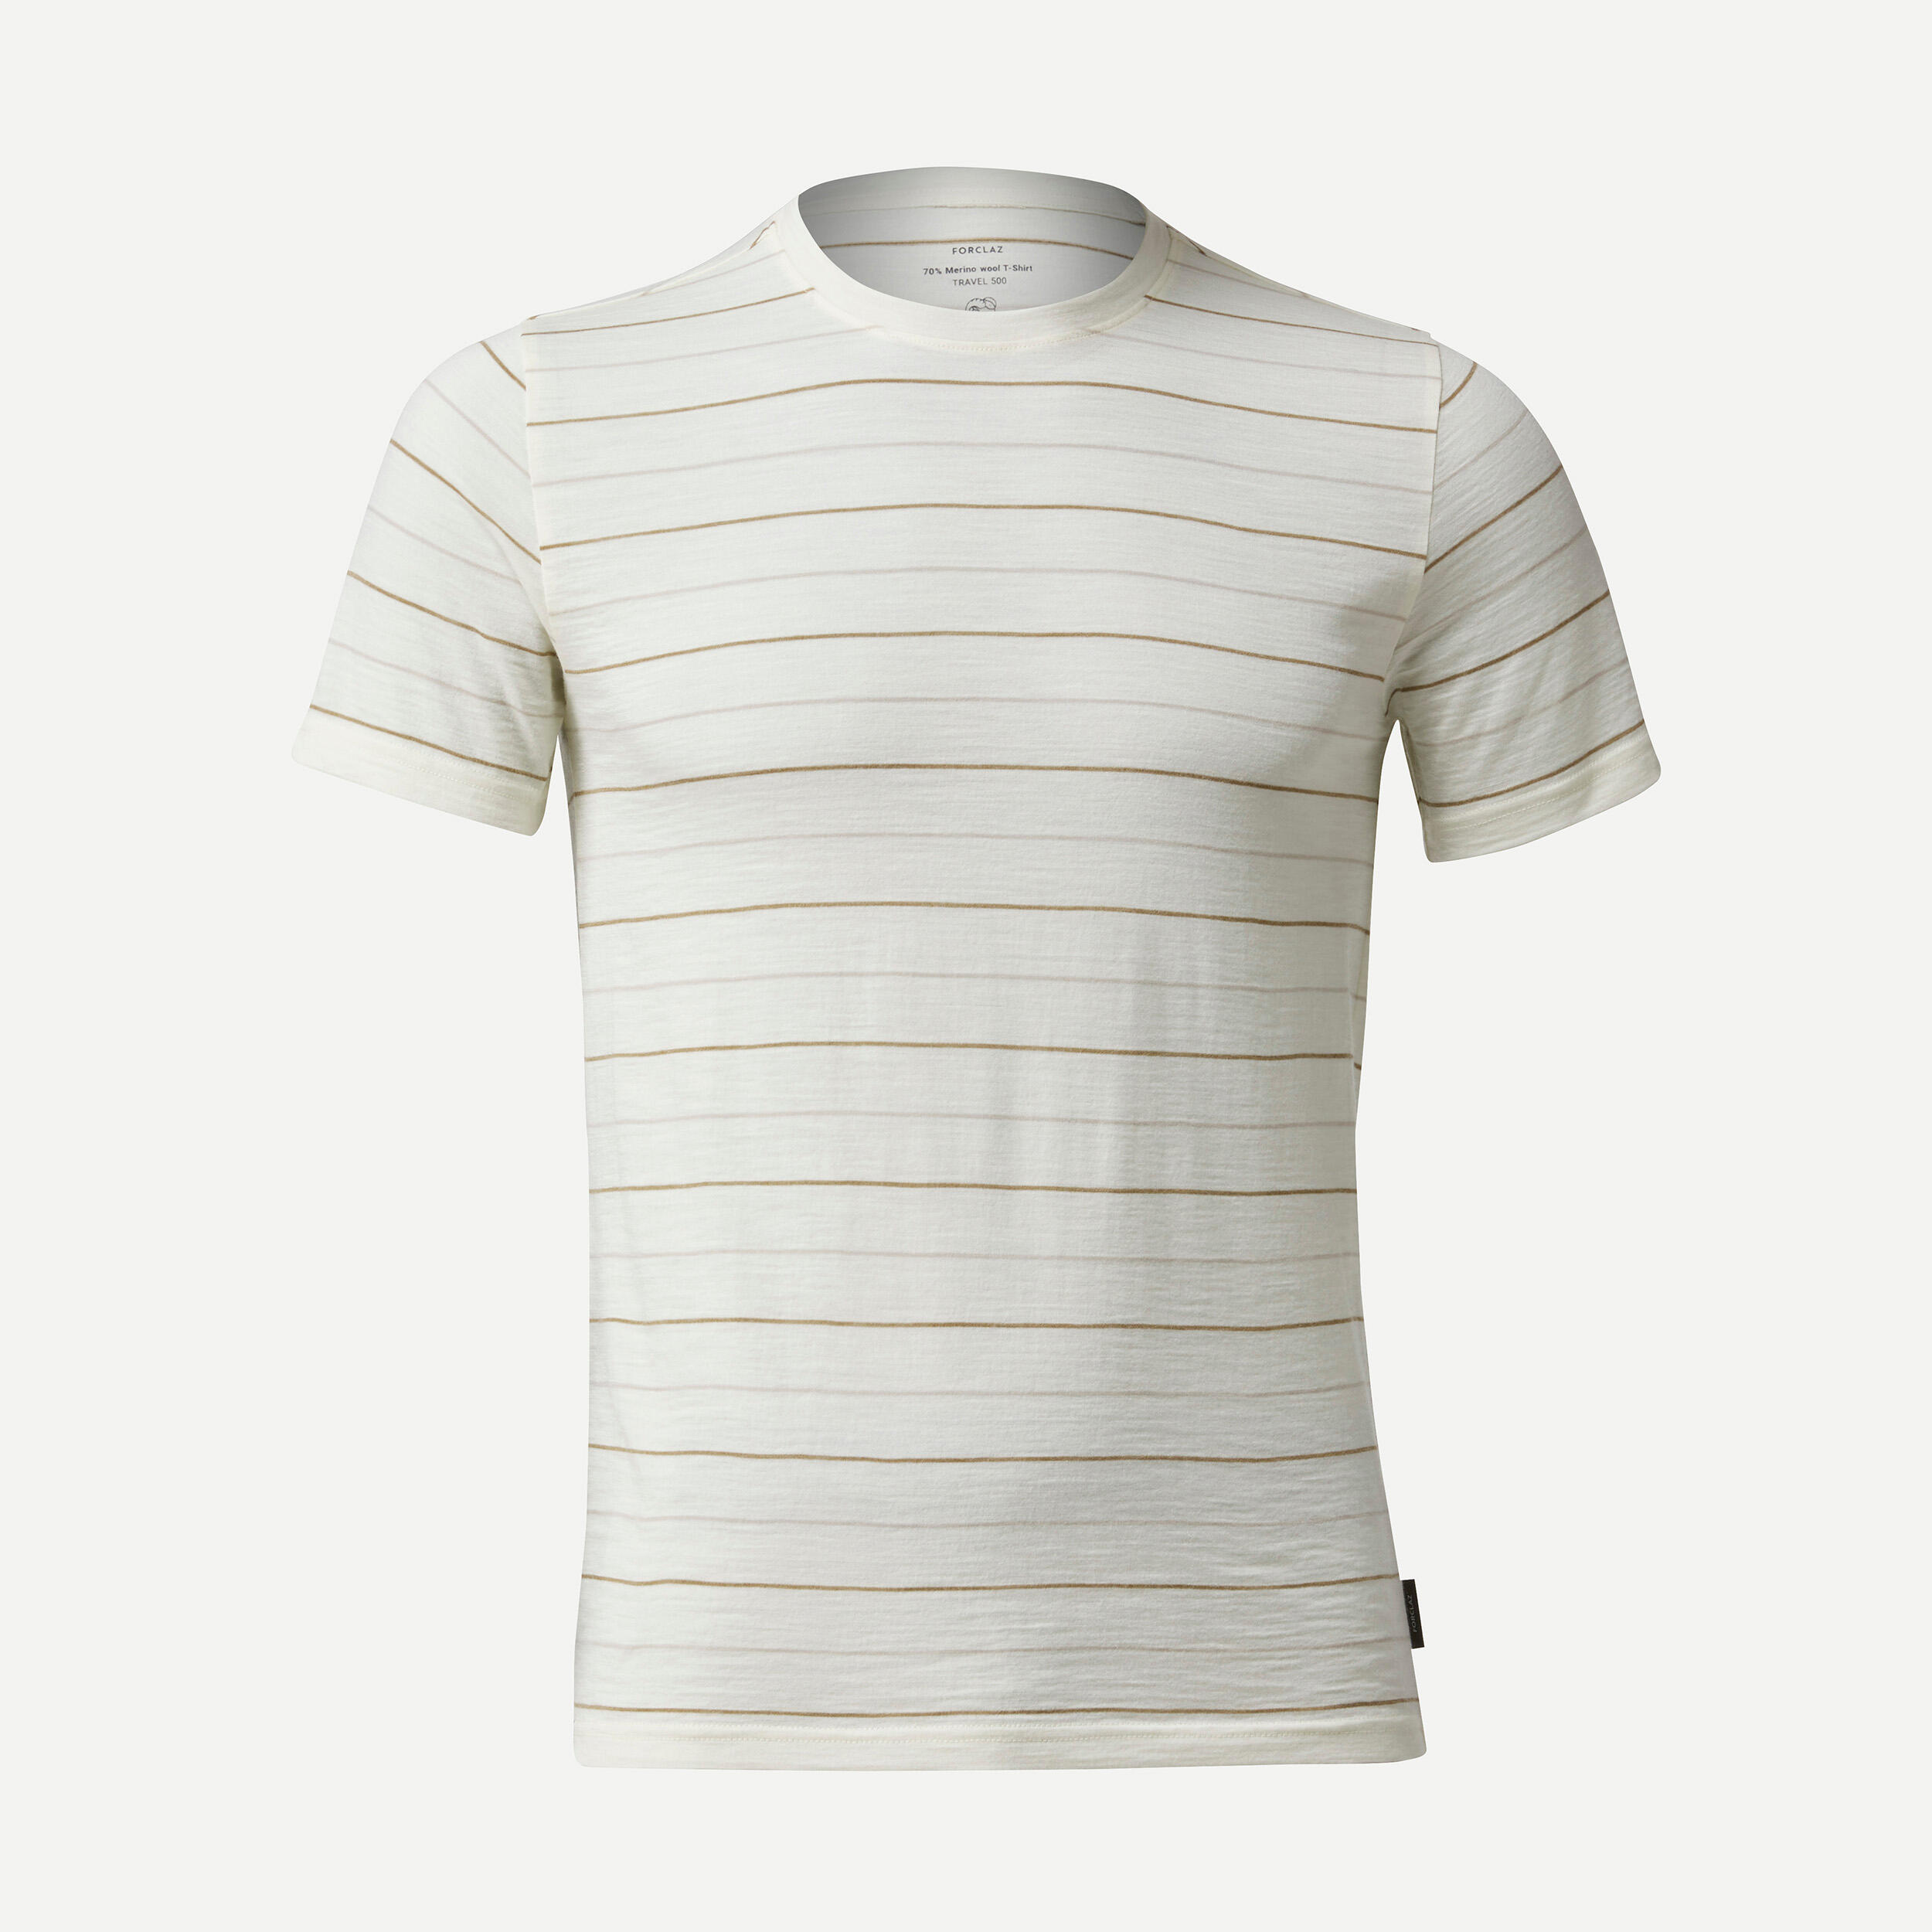 Men’s short-sleeved Merino wool hiking travel t-shirt - TRAVEL 500 white 5/6